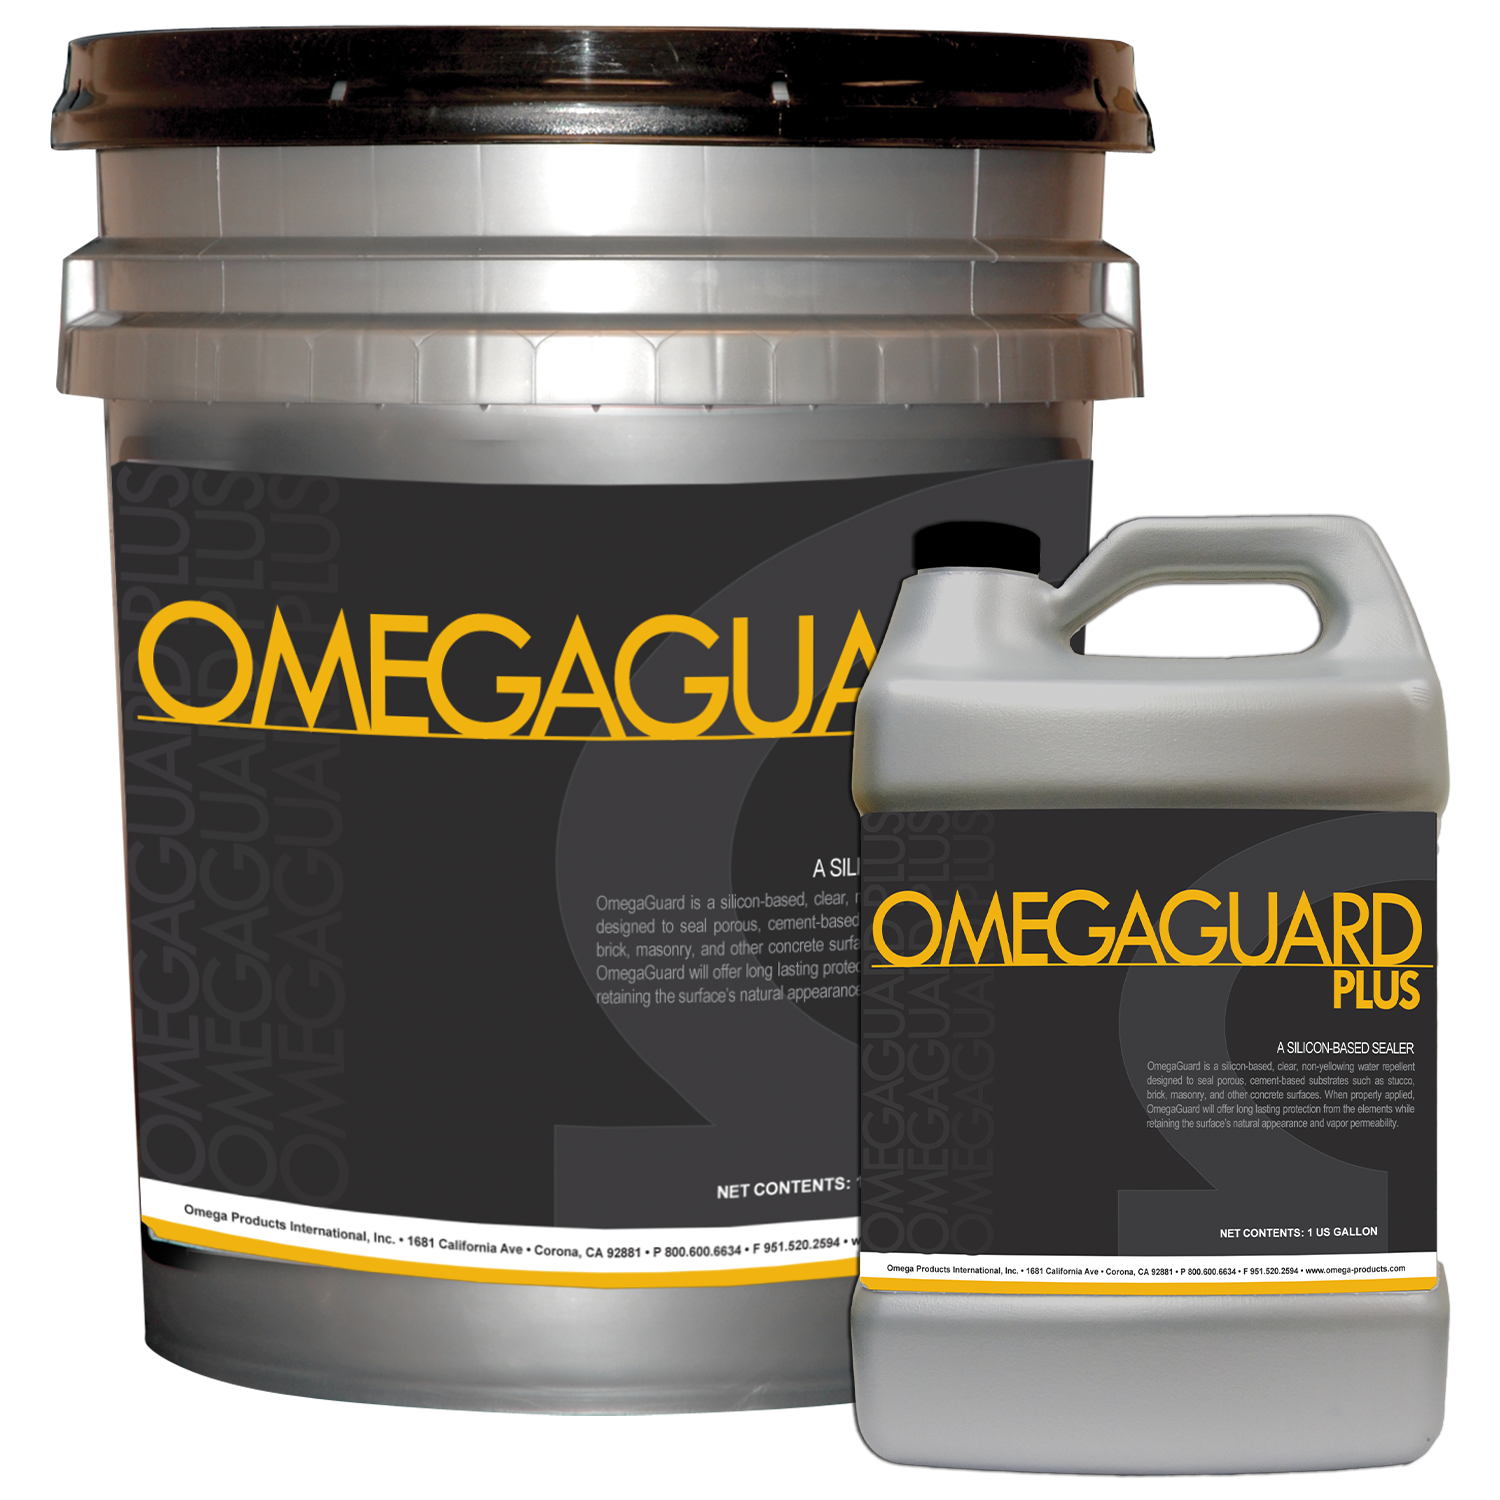 OmegaGuard Plus - Omega Products International